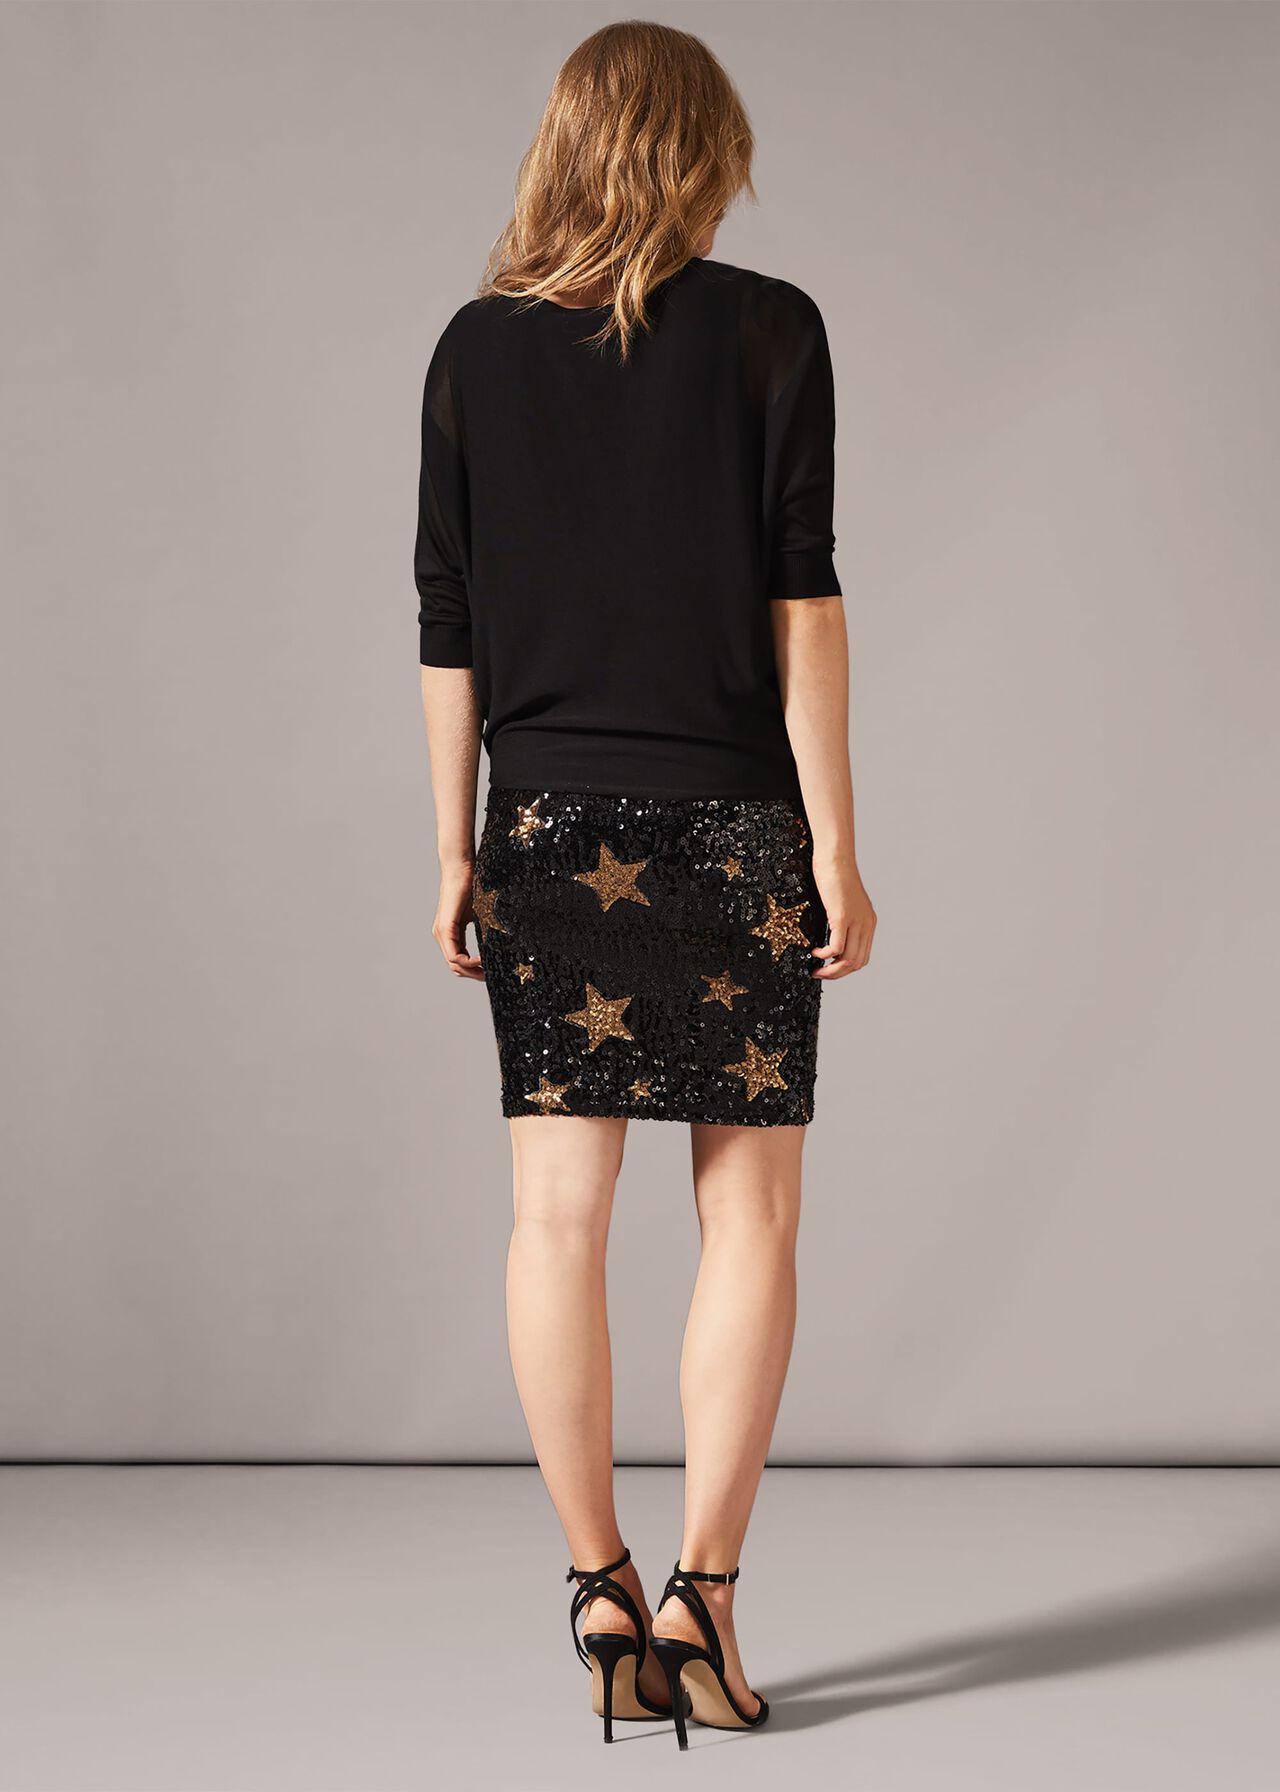 Geonna Sequin Star Knit Dress